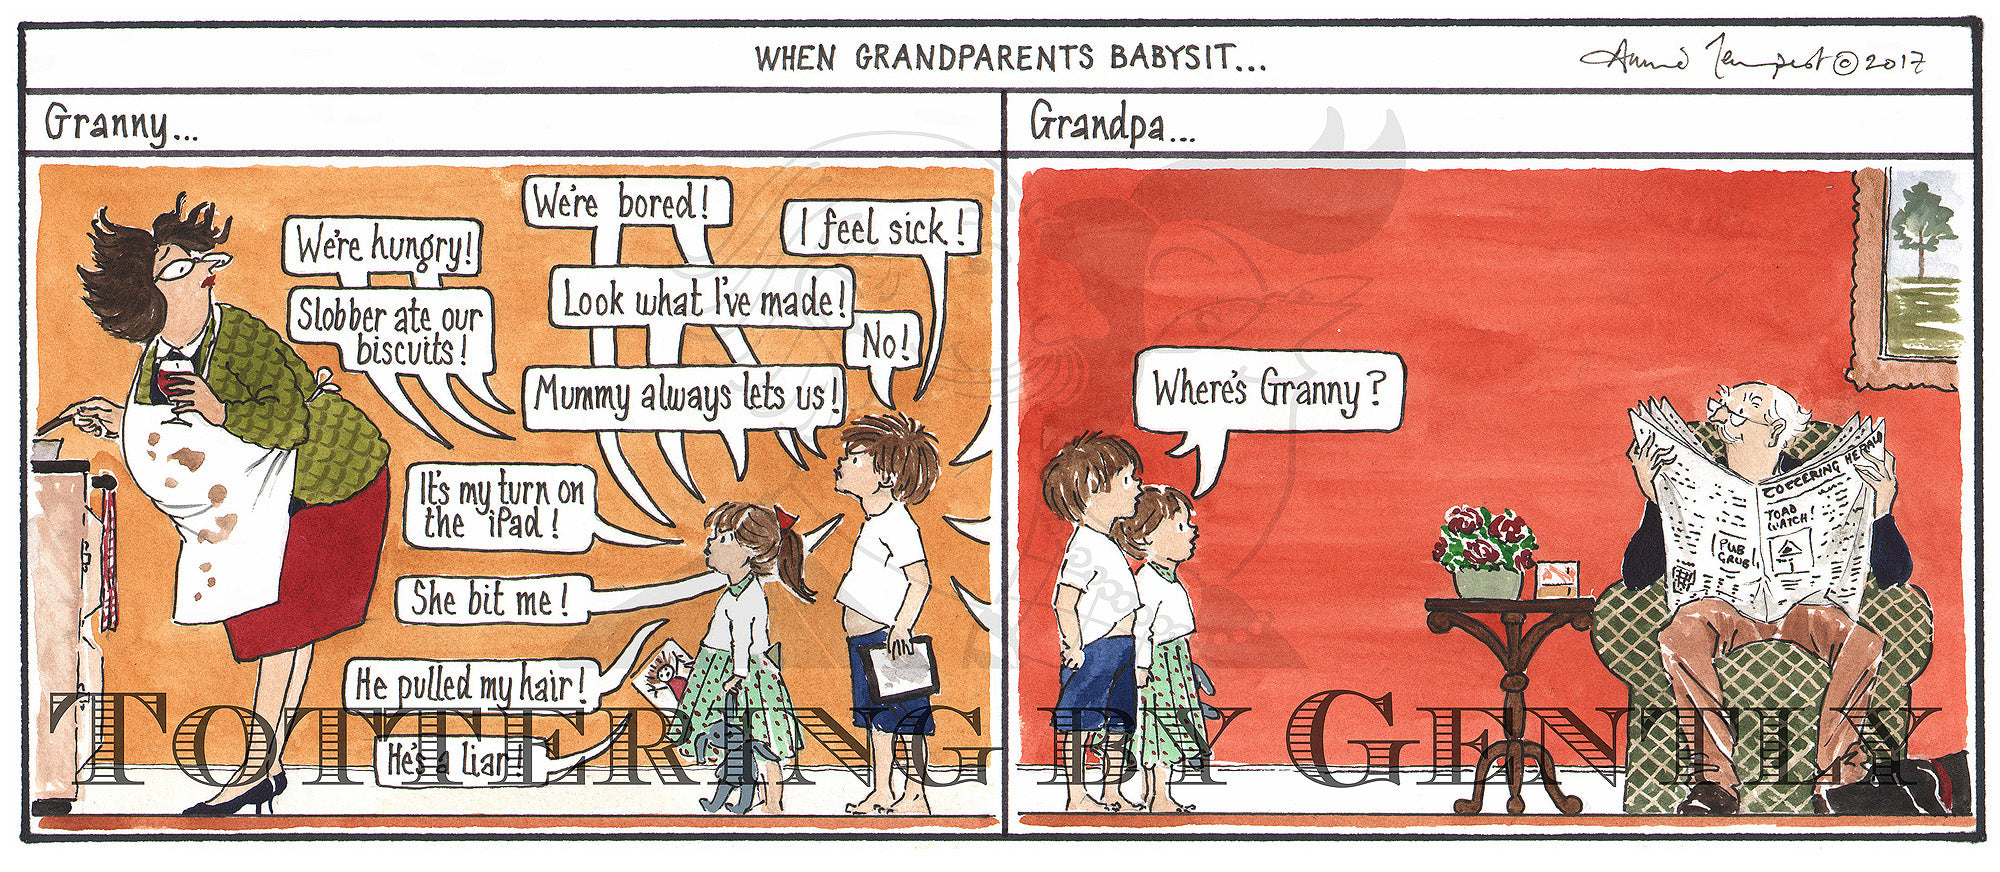 When grandparents babysit... (CL1197)